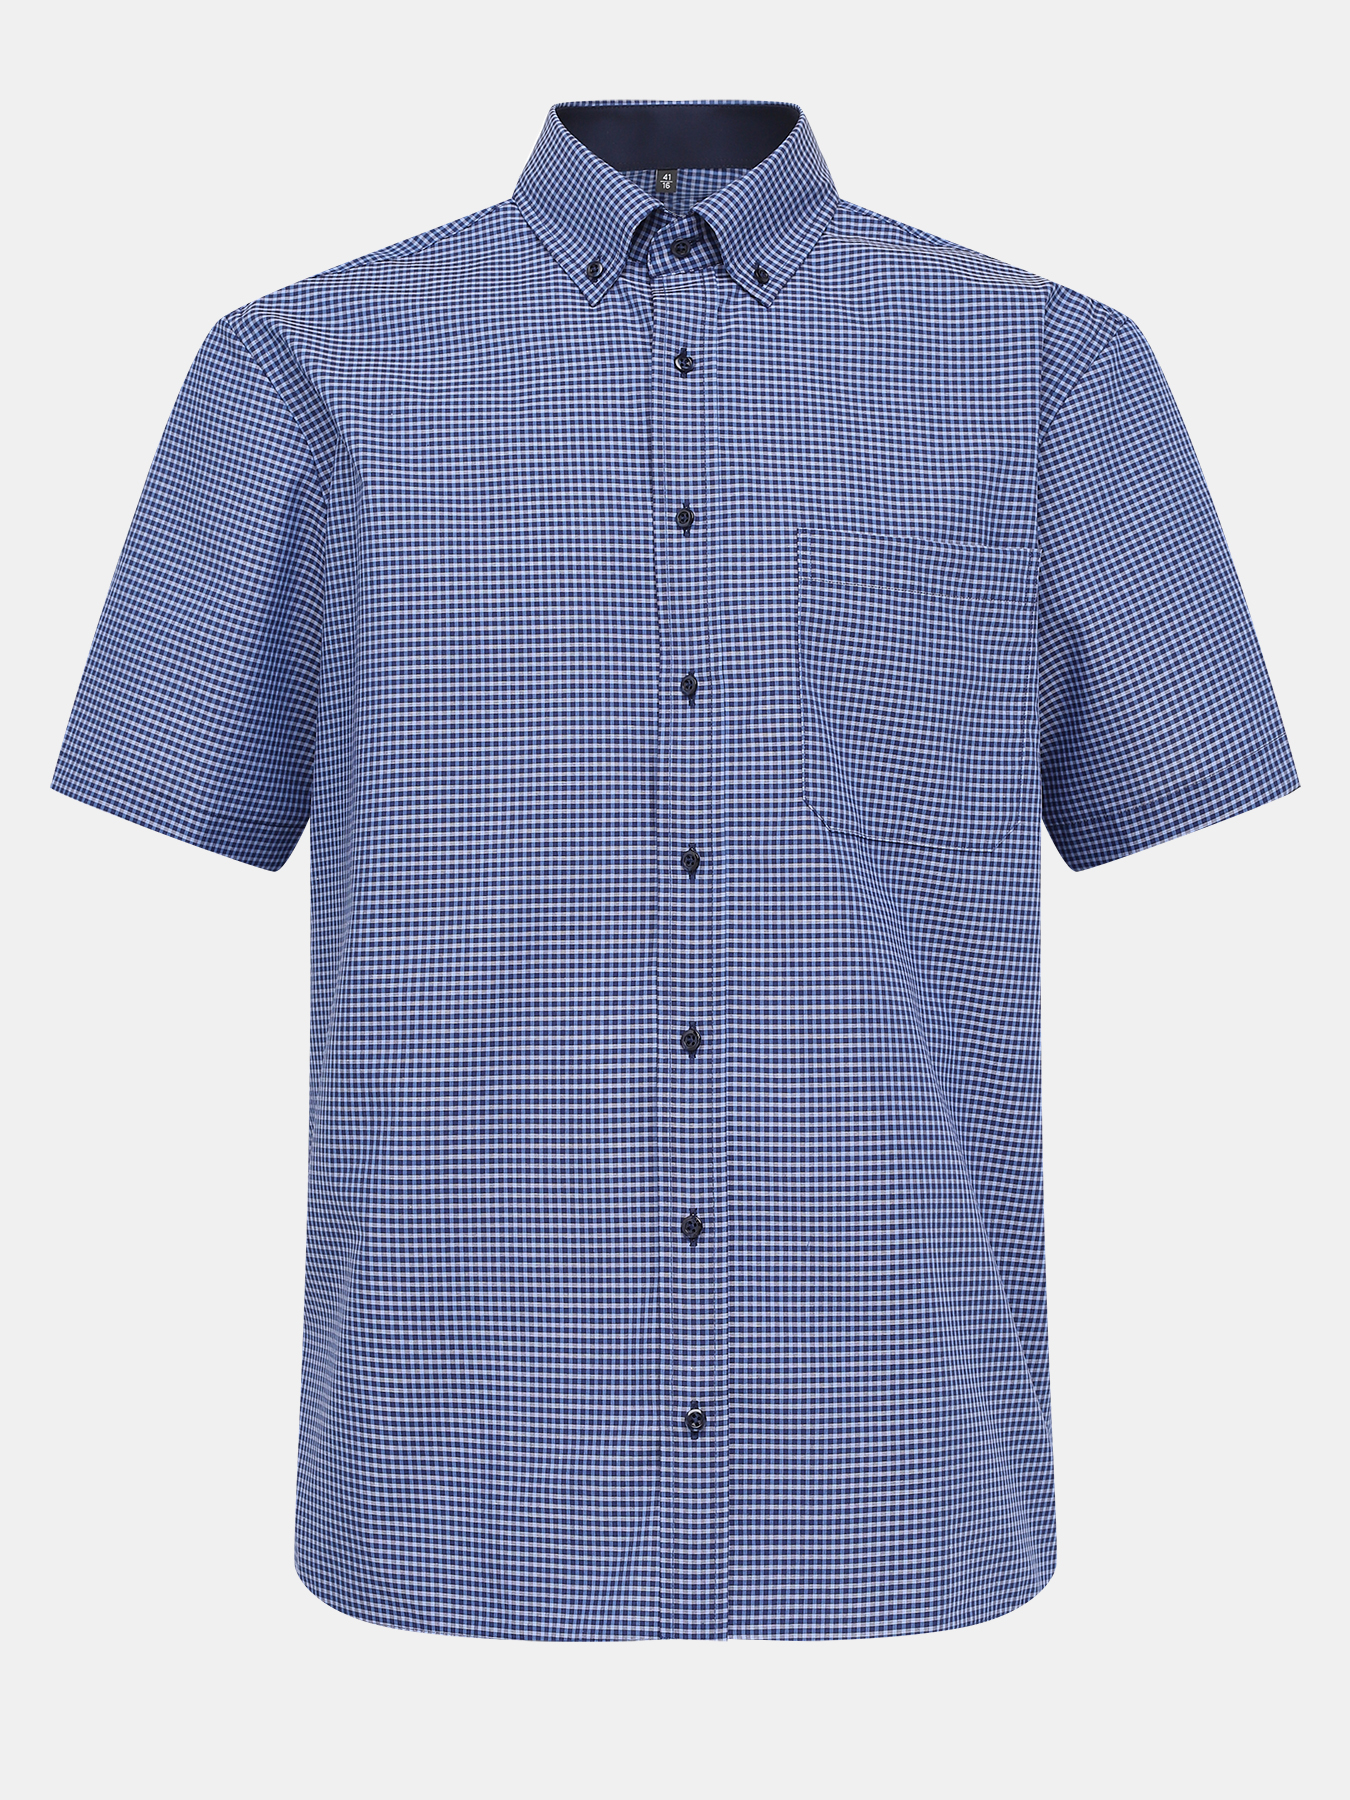 Рубашка Eterna 416186-024, цвет темно-синий, размер 62 - фото 1